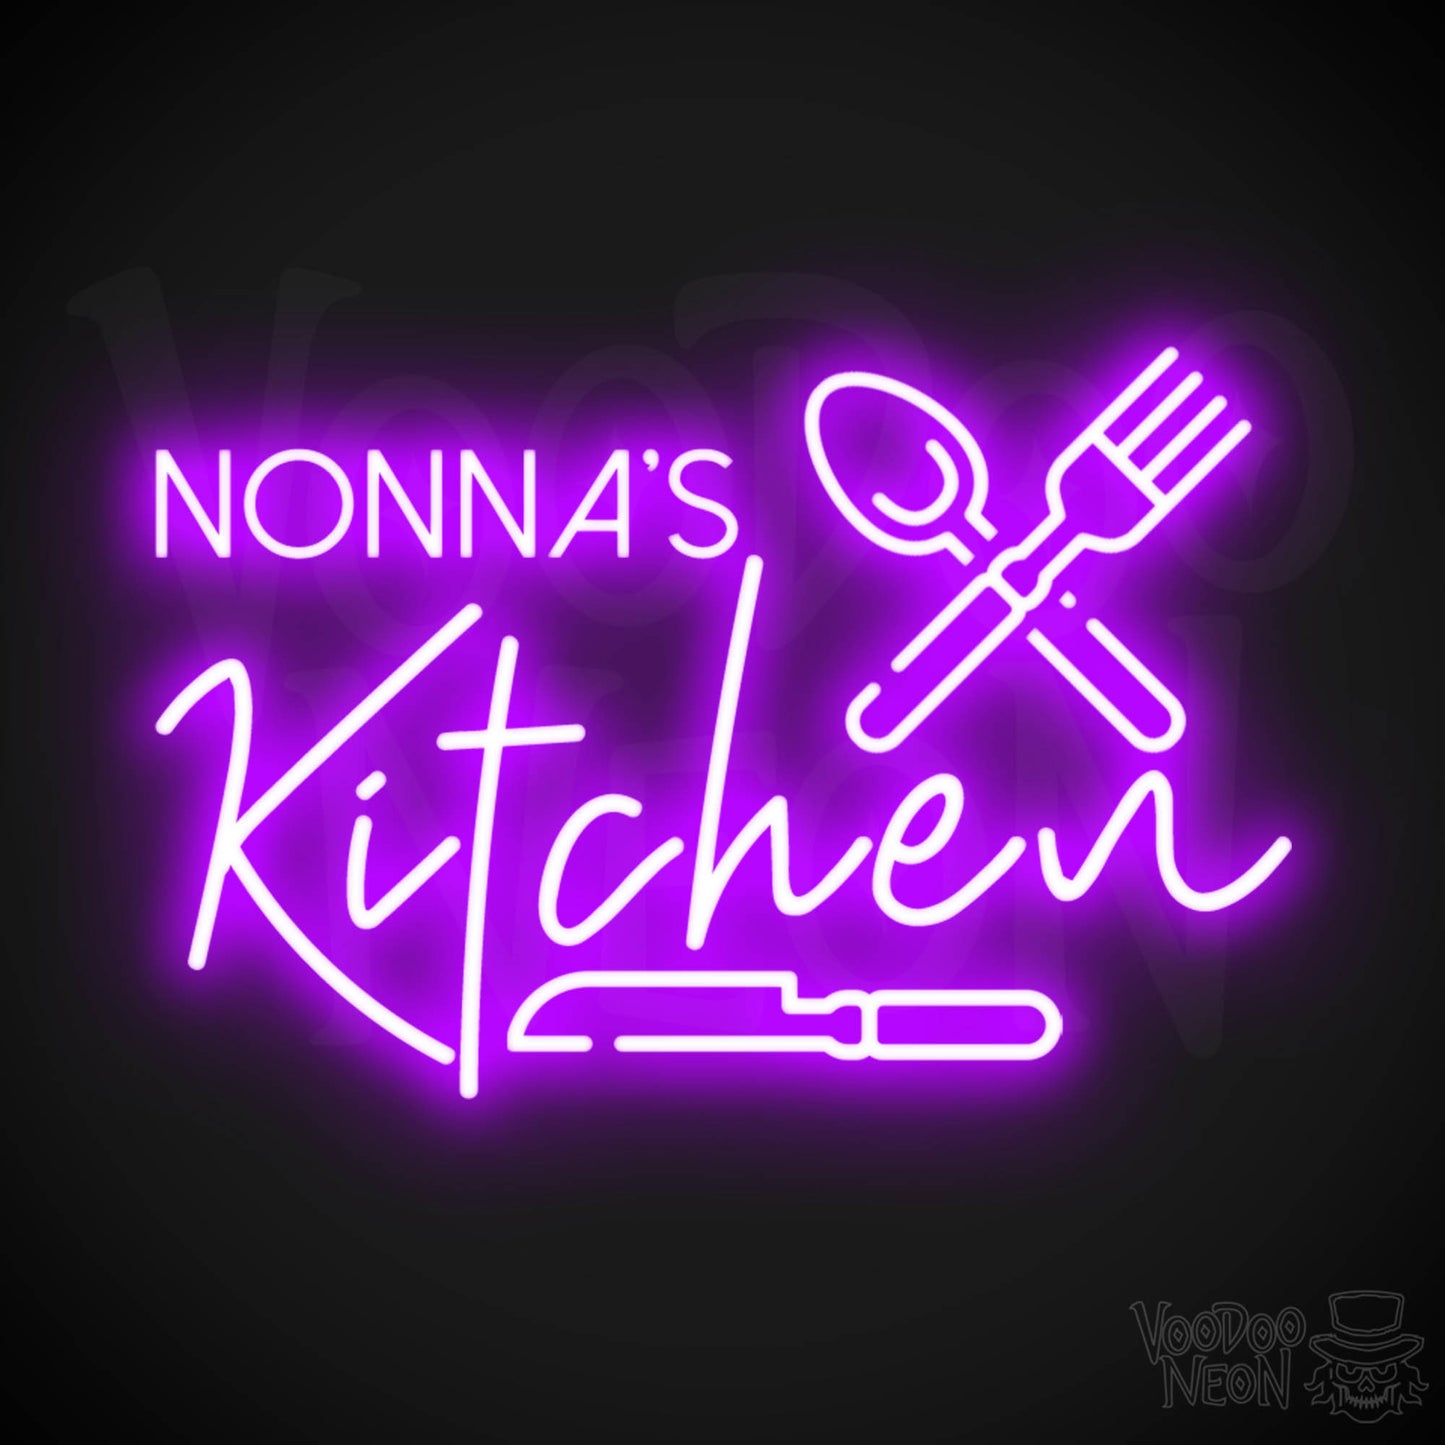 Nonna's Kitchen Neon Sign - Neon Nona's Kitchen Sign - Wall Art - Color Purple